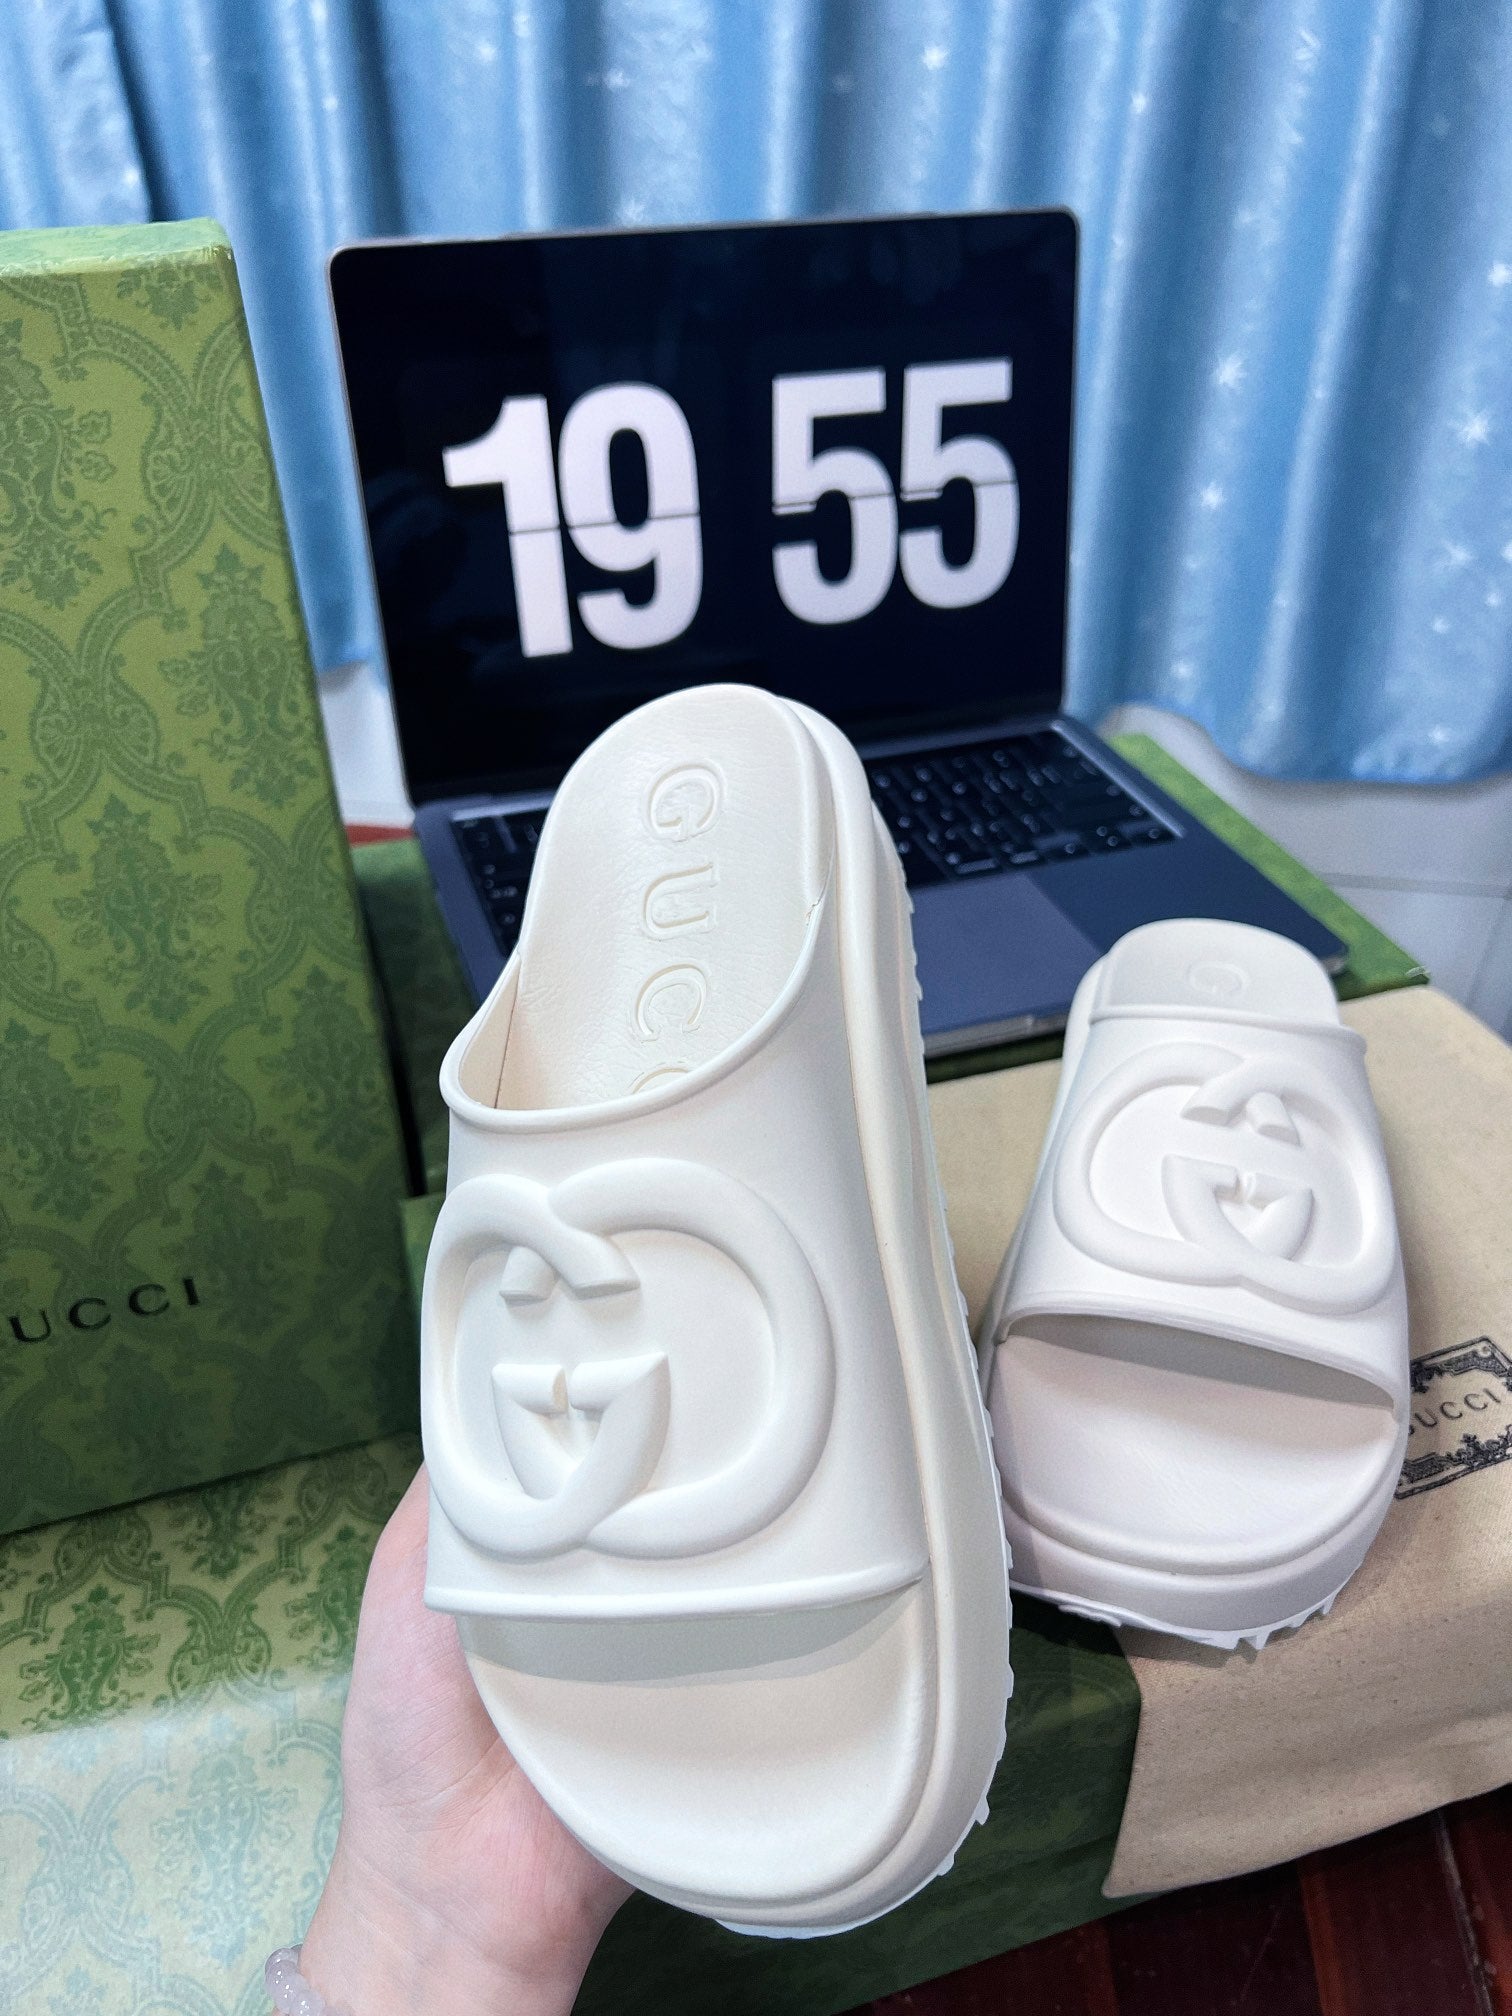 GG new arrival slippers heels 4-5 cm 